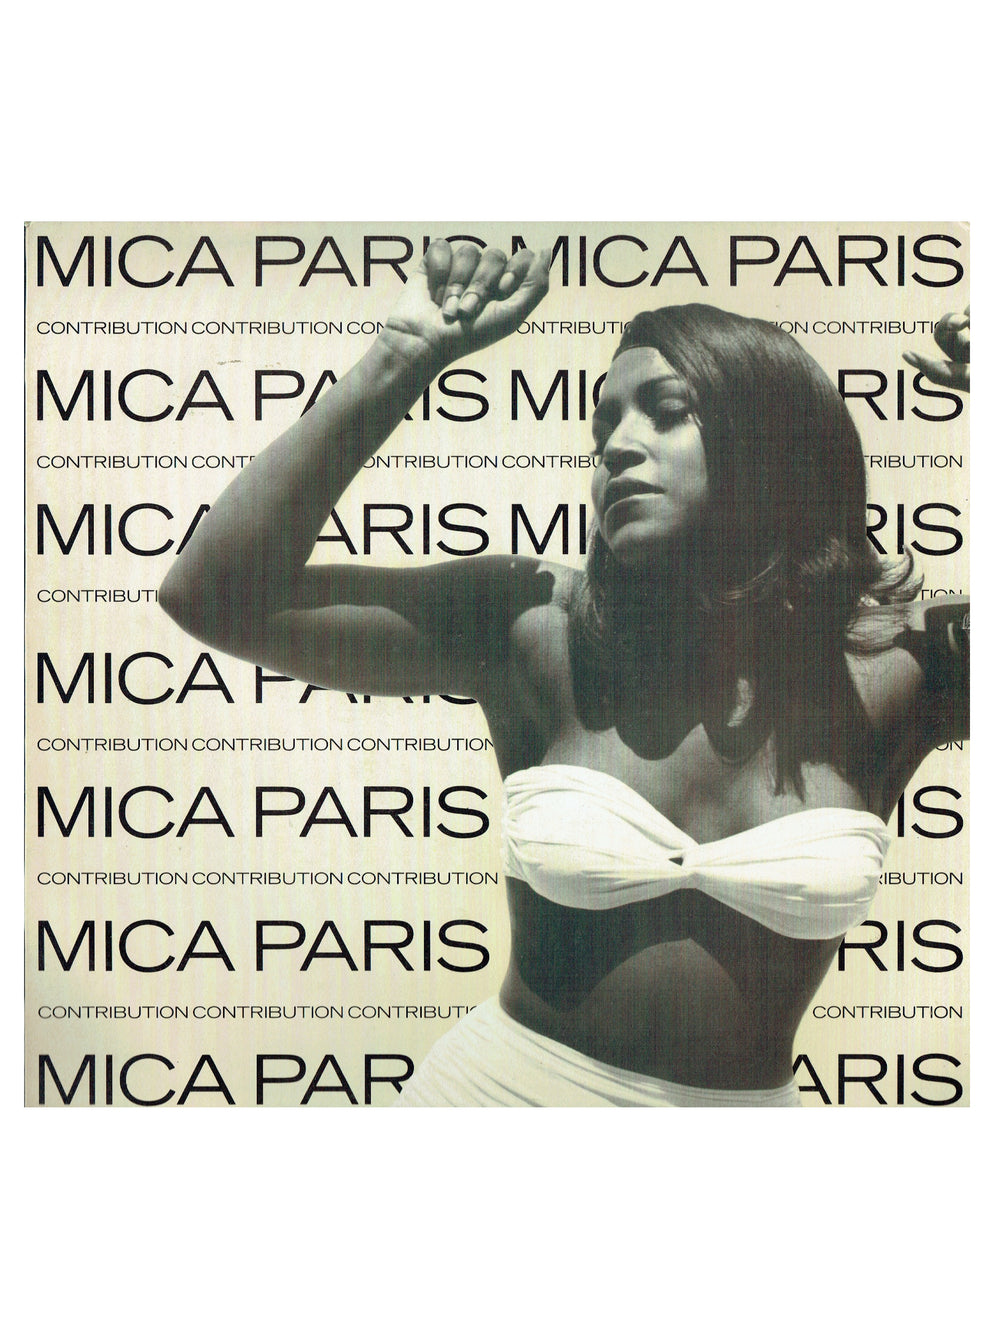 Prince – Mica Paris Contribution 1990 UK Release Vinyl Album Prince